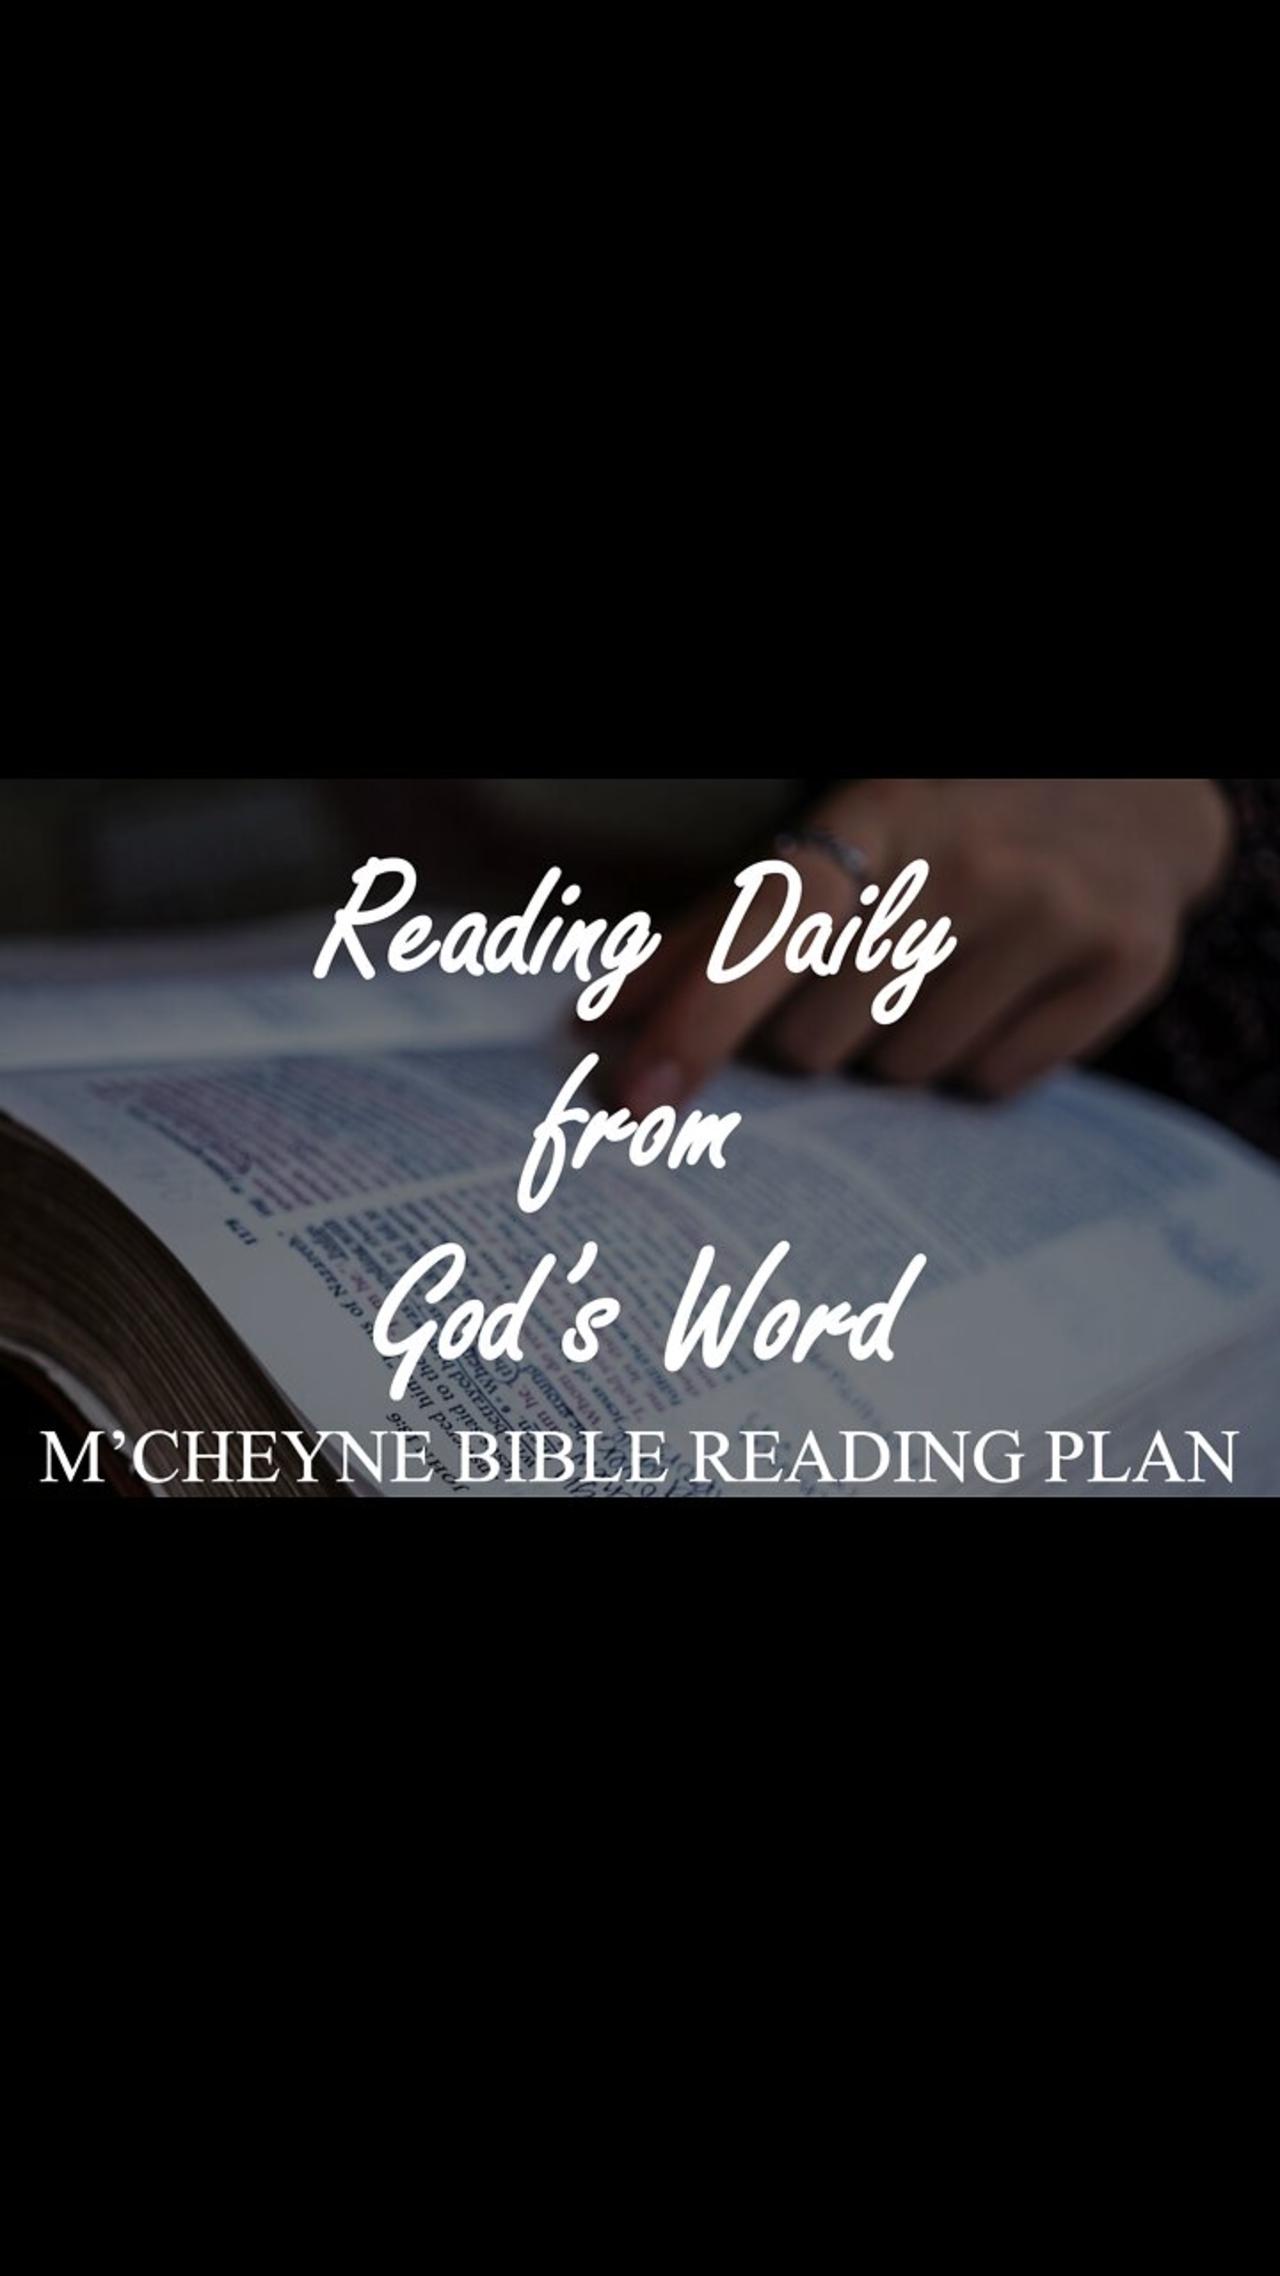 M’CHEYNE BIBLE READING PLAN - September 6